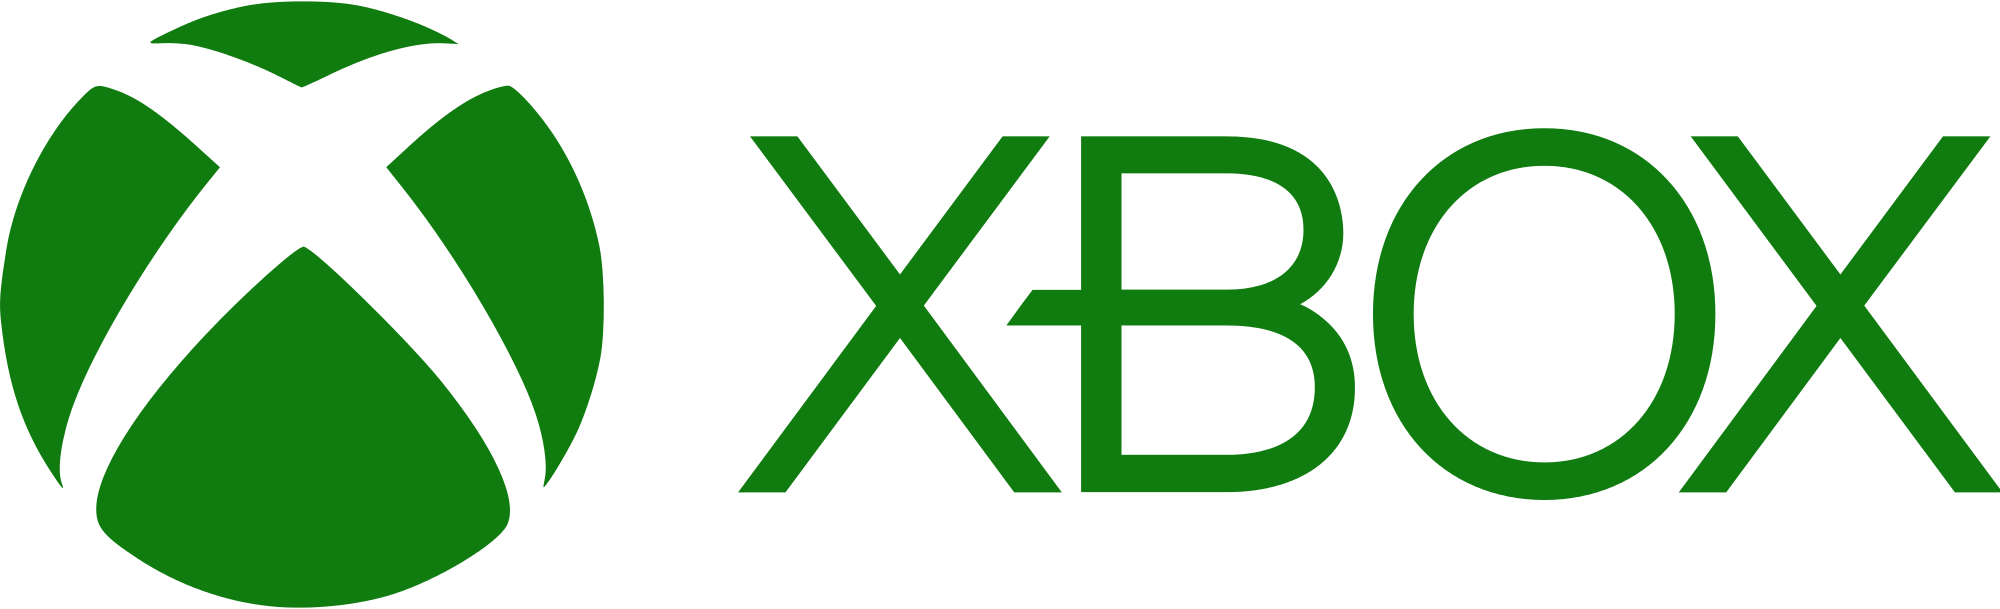 Xobox Logo - File:XBOX logo 2012.svg - Wikimedia Commons